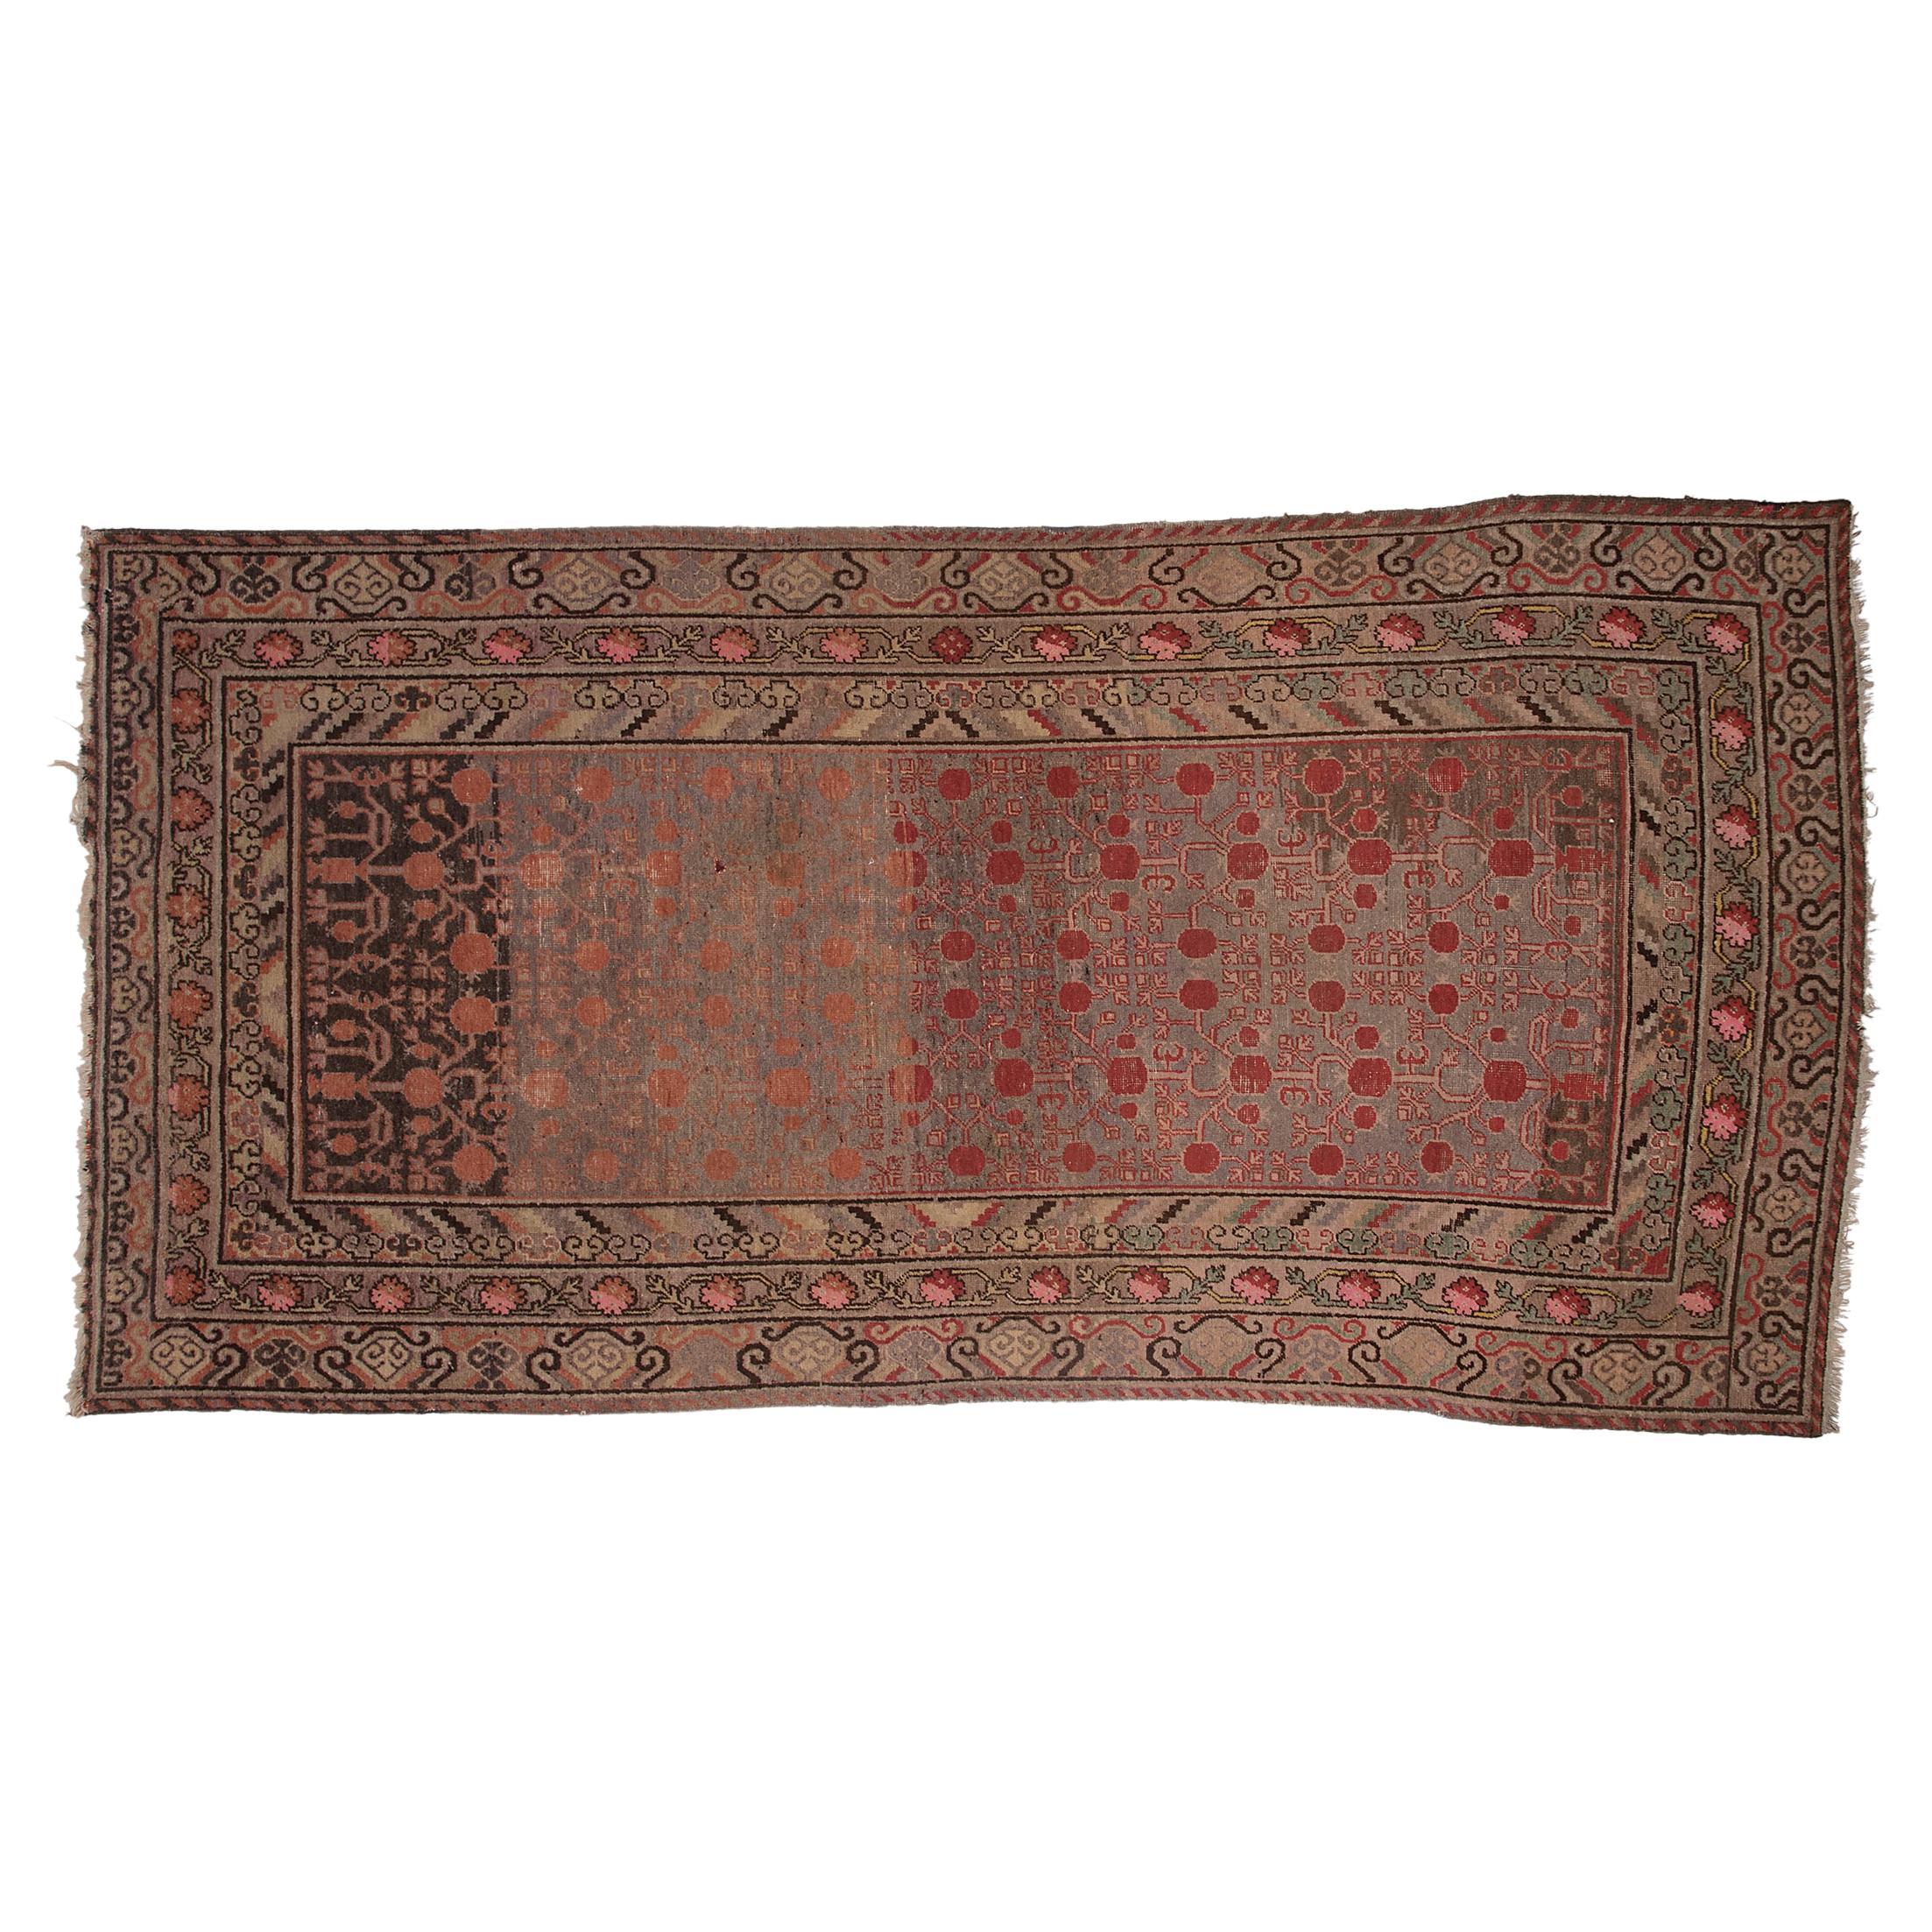 Antique Pomegranate Tree Samarkand Carpet, c. 1920s For Sale